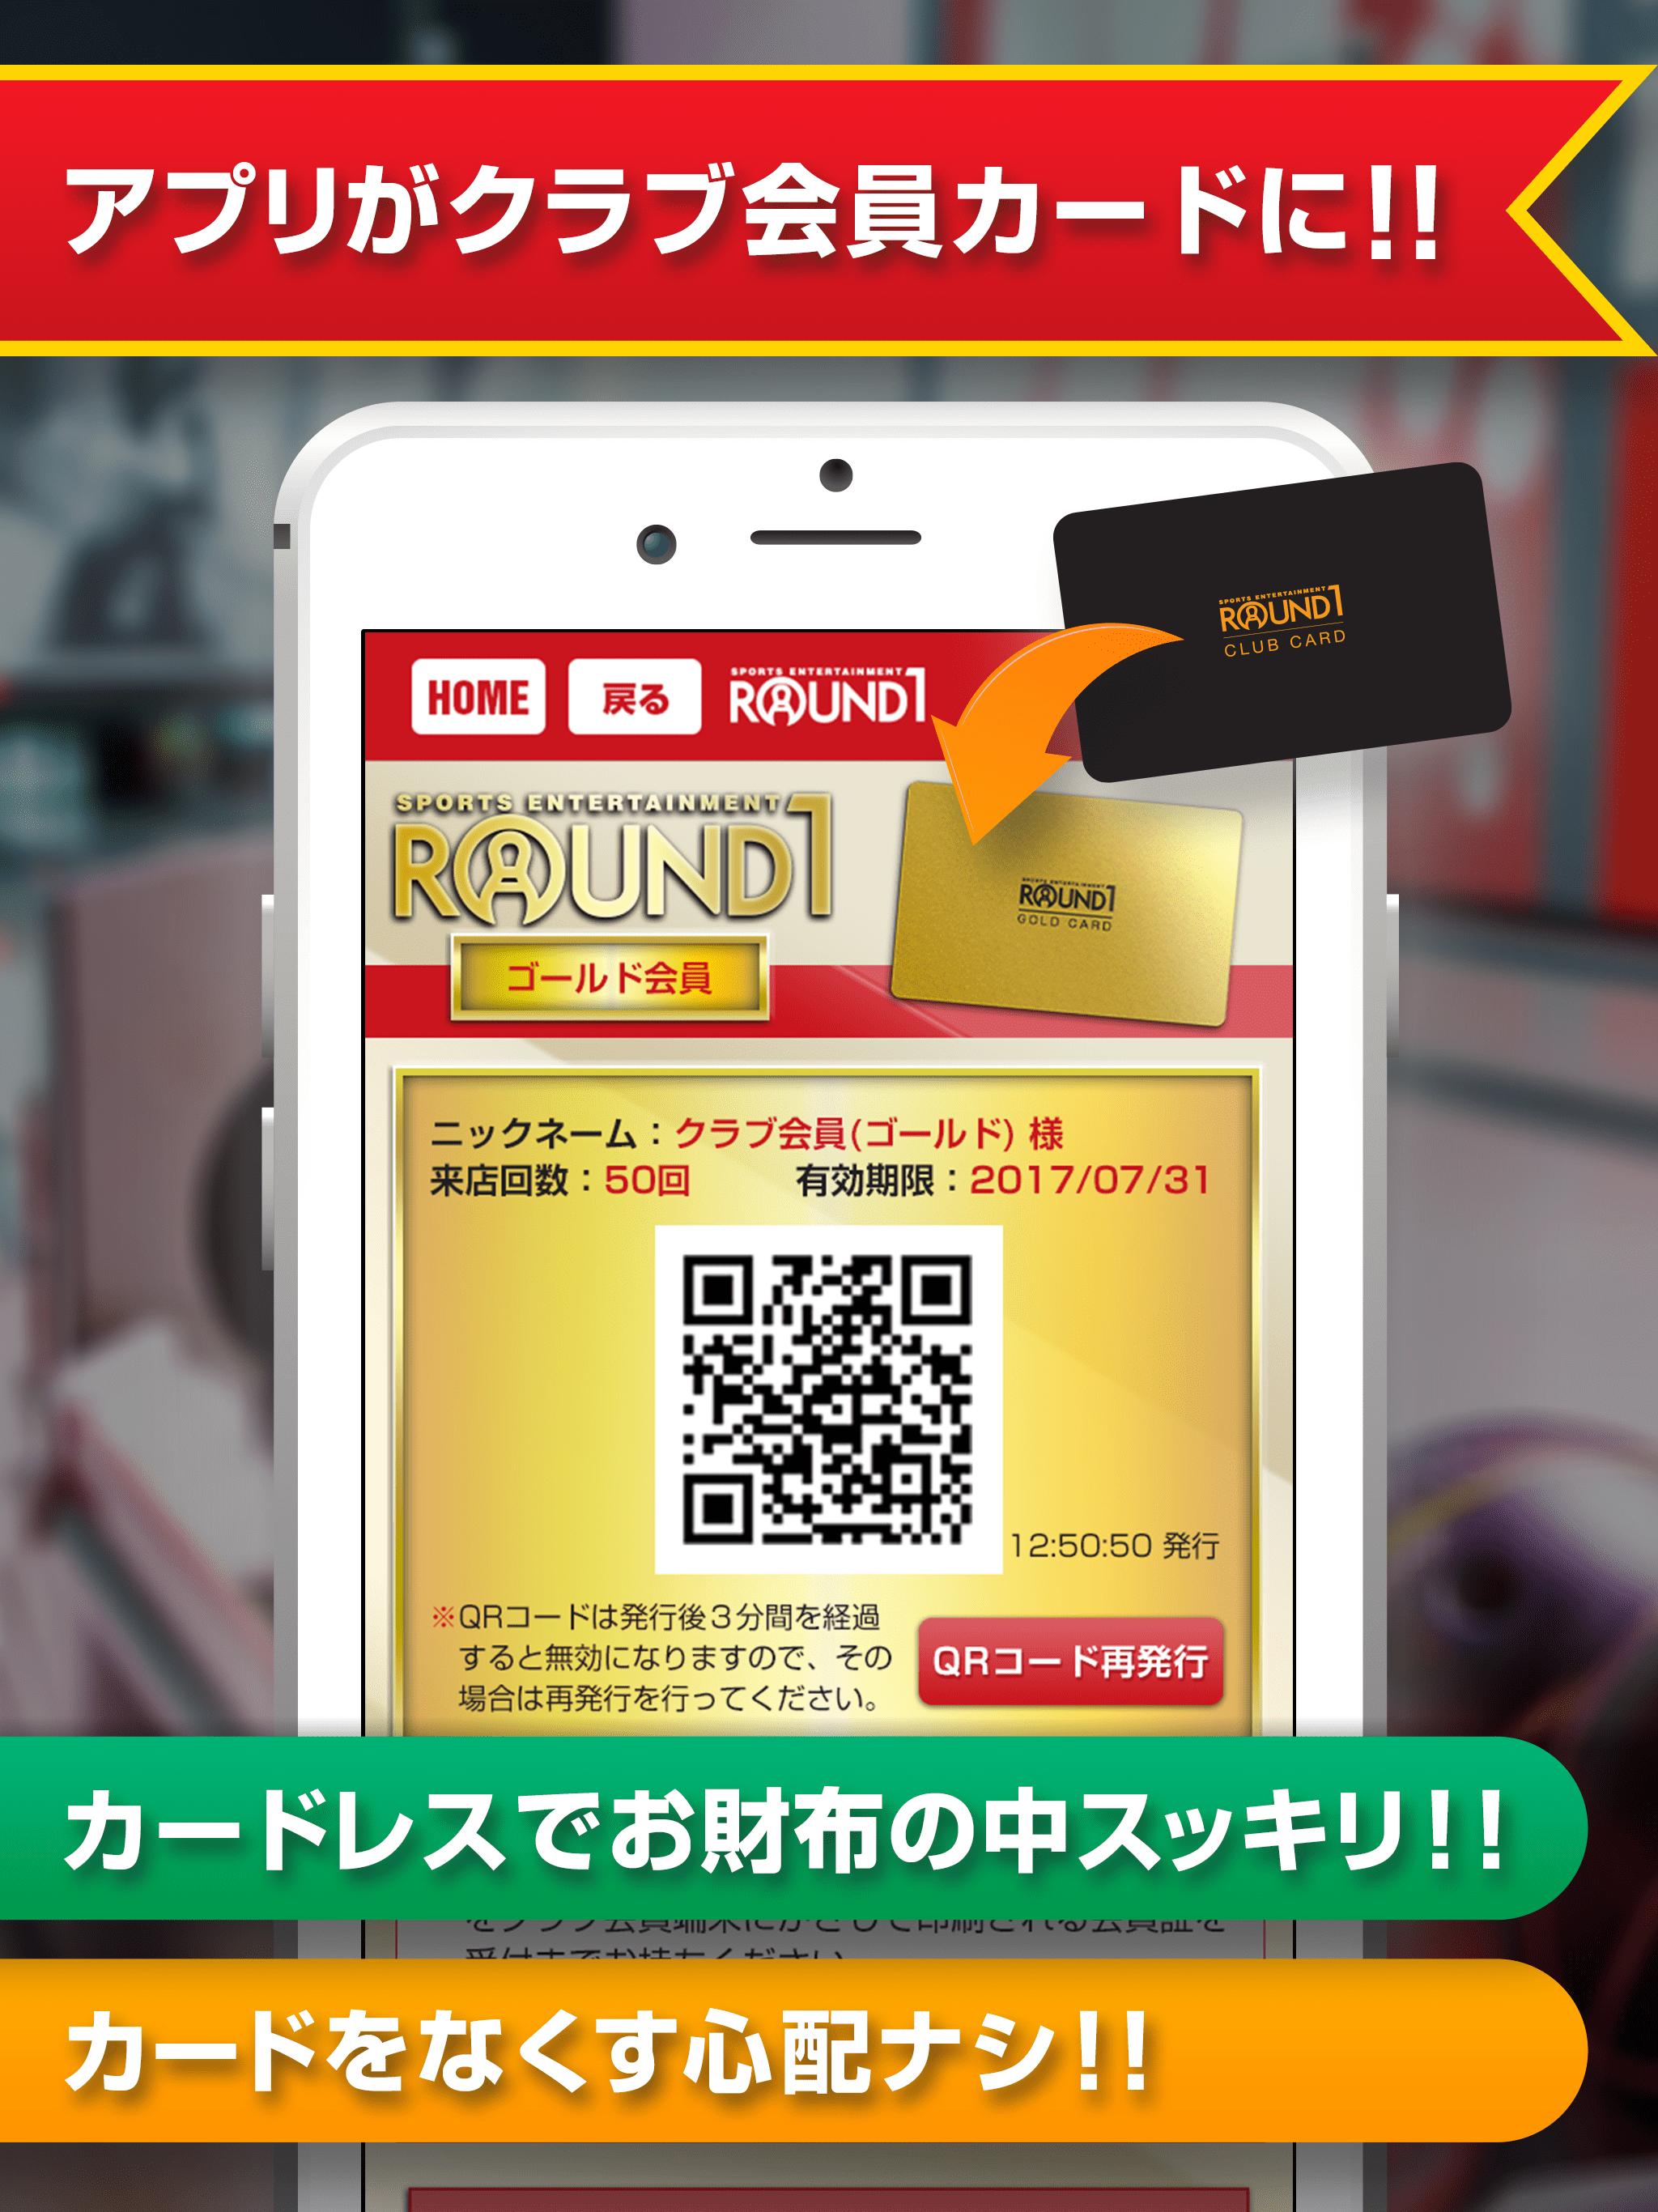 Round1 お得なクーポン毎週配信 Para Android Apk Baixar